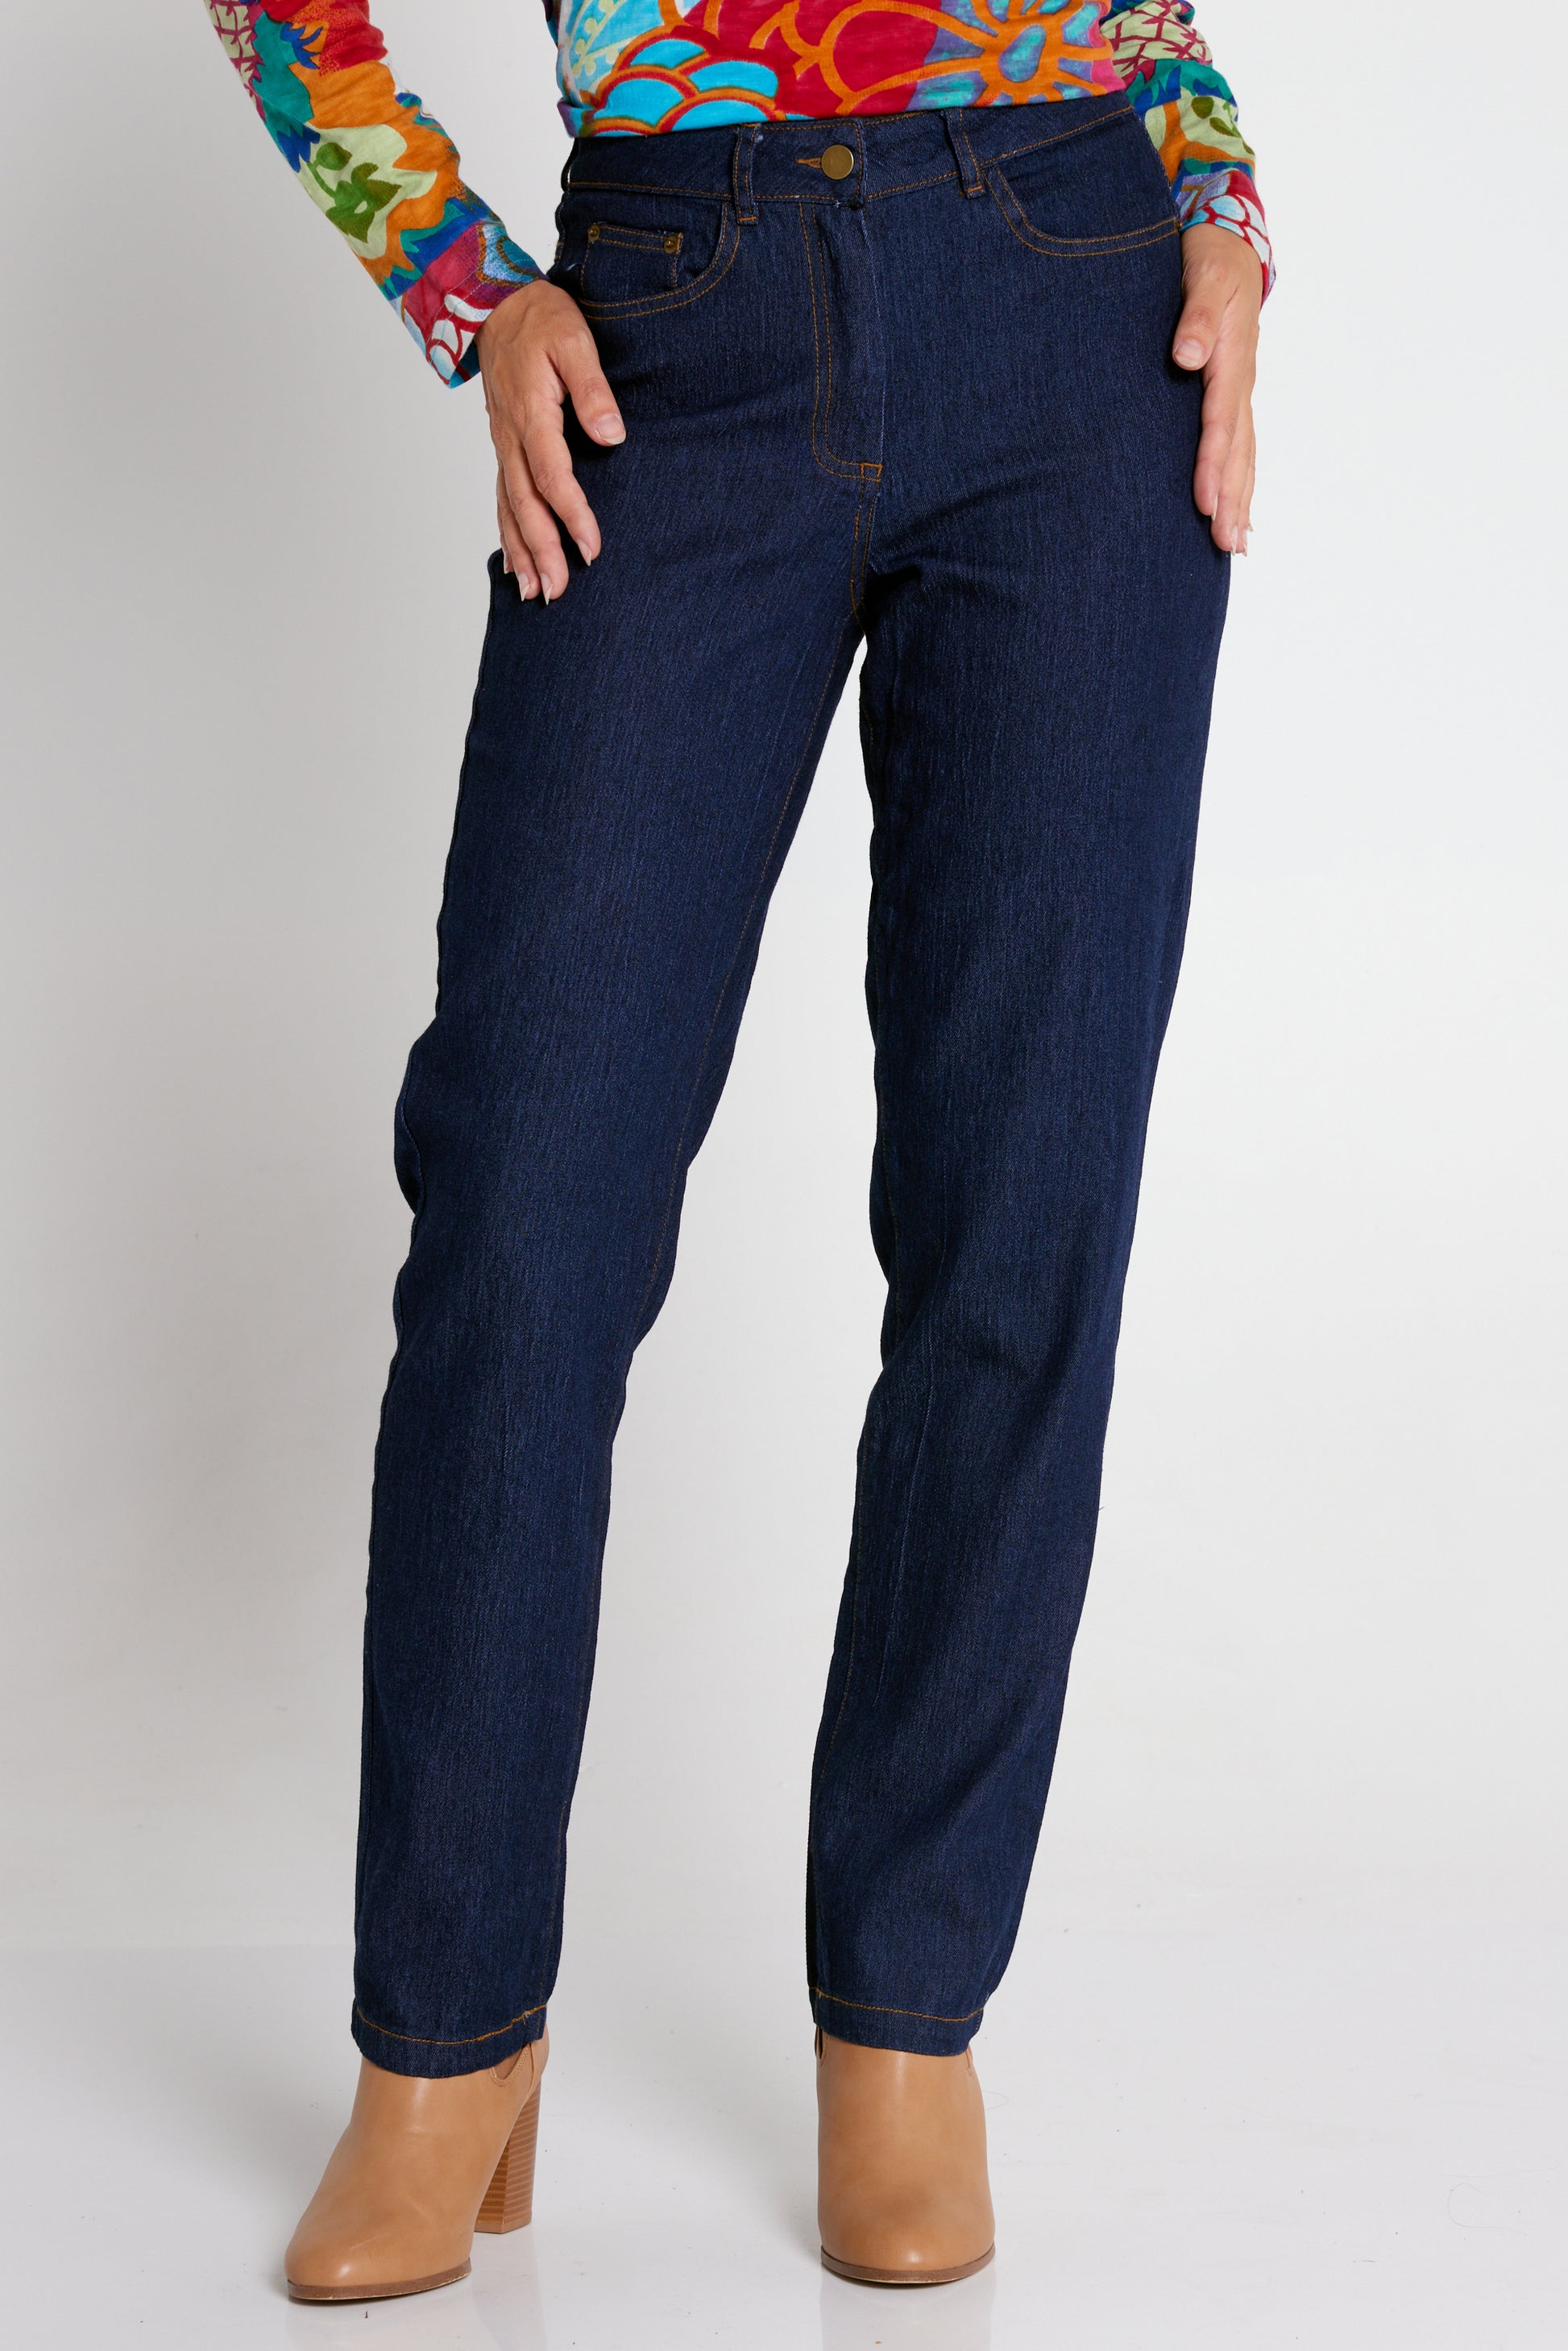 TULIO Mature Fashion, Hillwood Pull On Jeans - Dark Wash